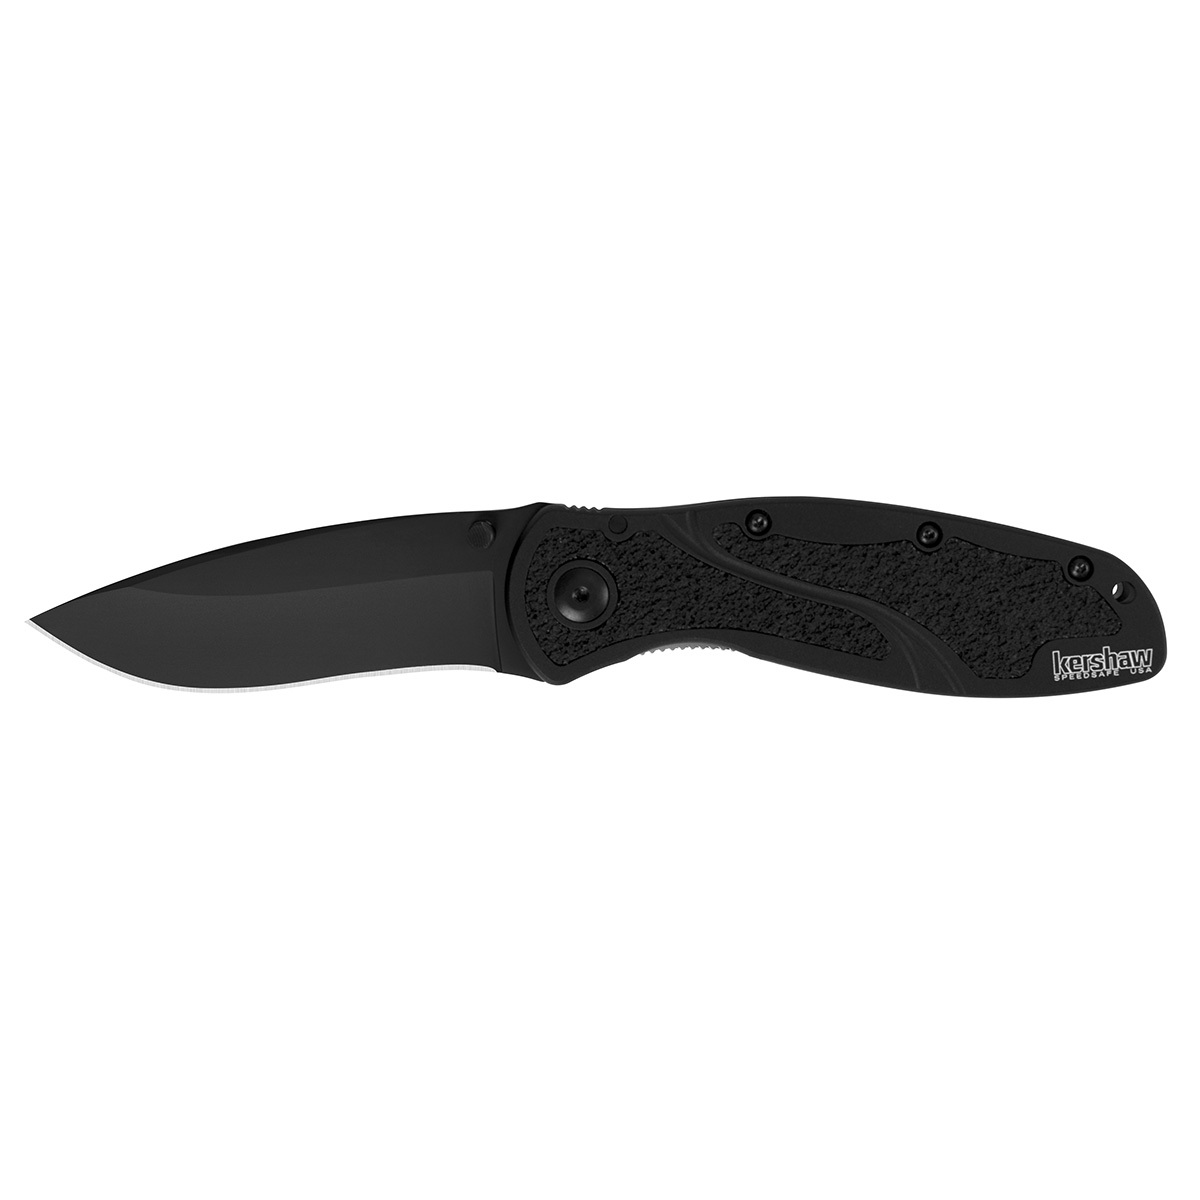 Складной нож Kershaw 1670BLK Blur Black, сталь Sandvik 14C28N, рукоять анодированный алюминий складной нож stinger с клипом 90 мм рукоять сталь алюминий пластик коробка картон